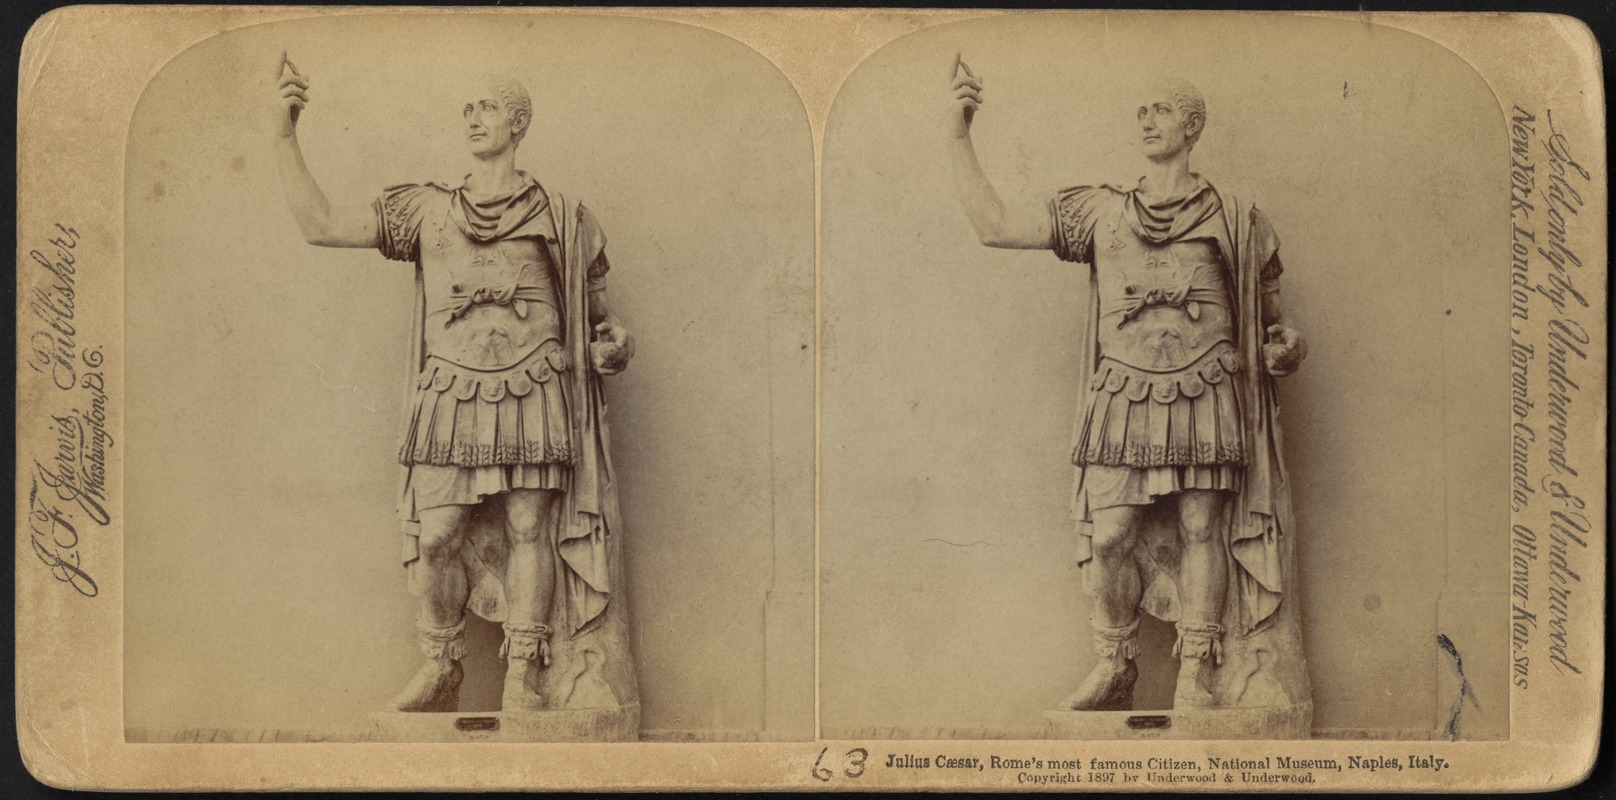 Julius Caesar, Rome's most famous citizen, National Museum, Naples, Italy